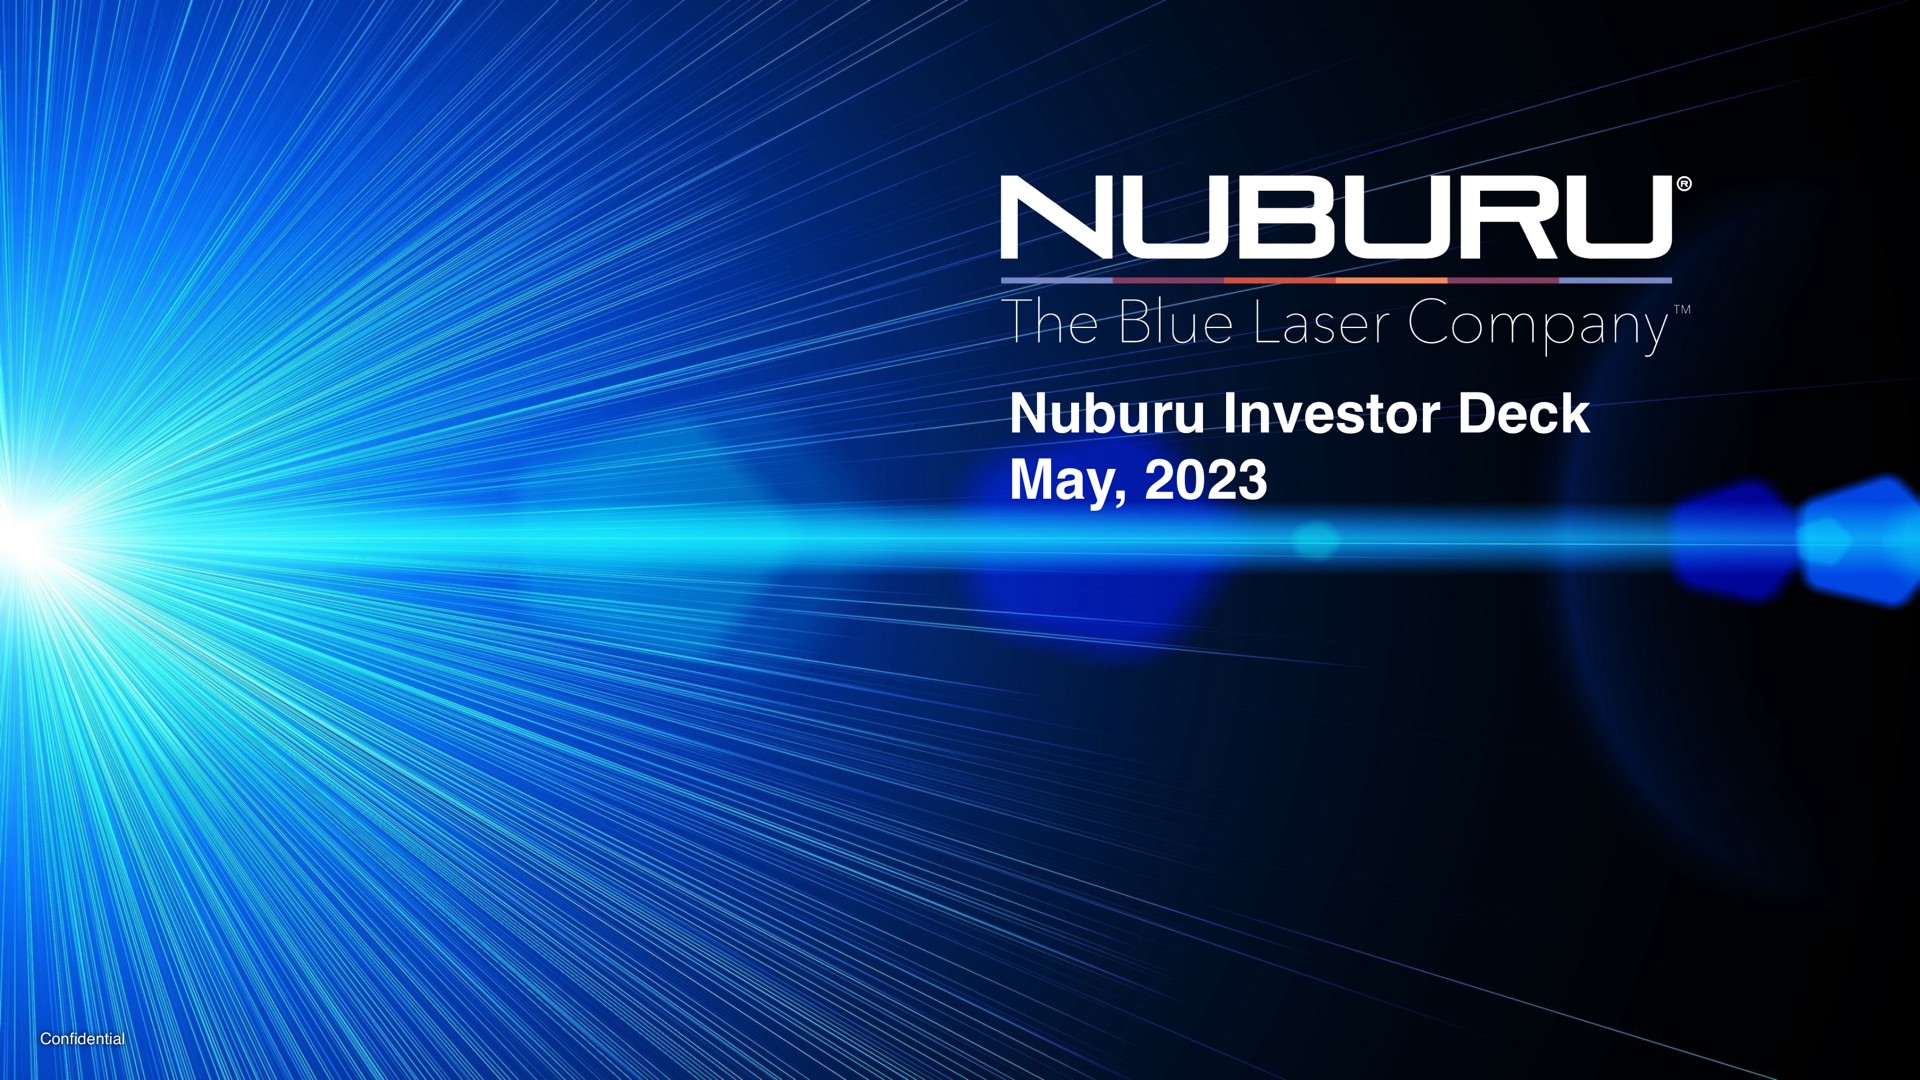 investor deck may laser company | NUBURU